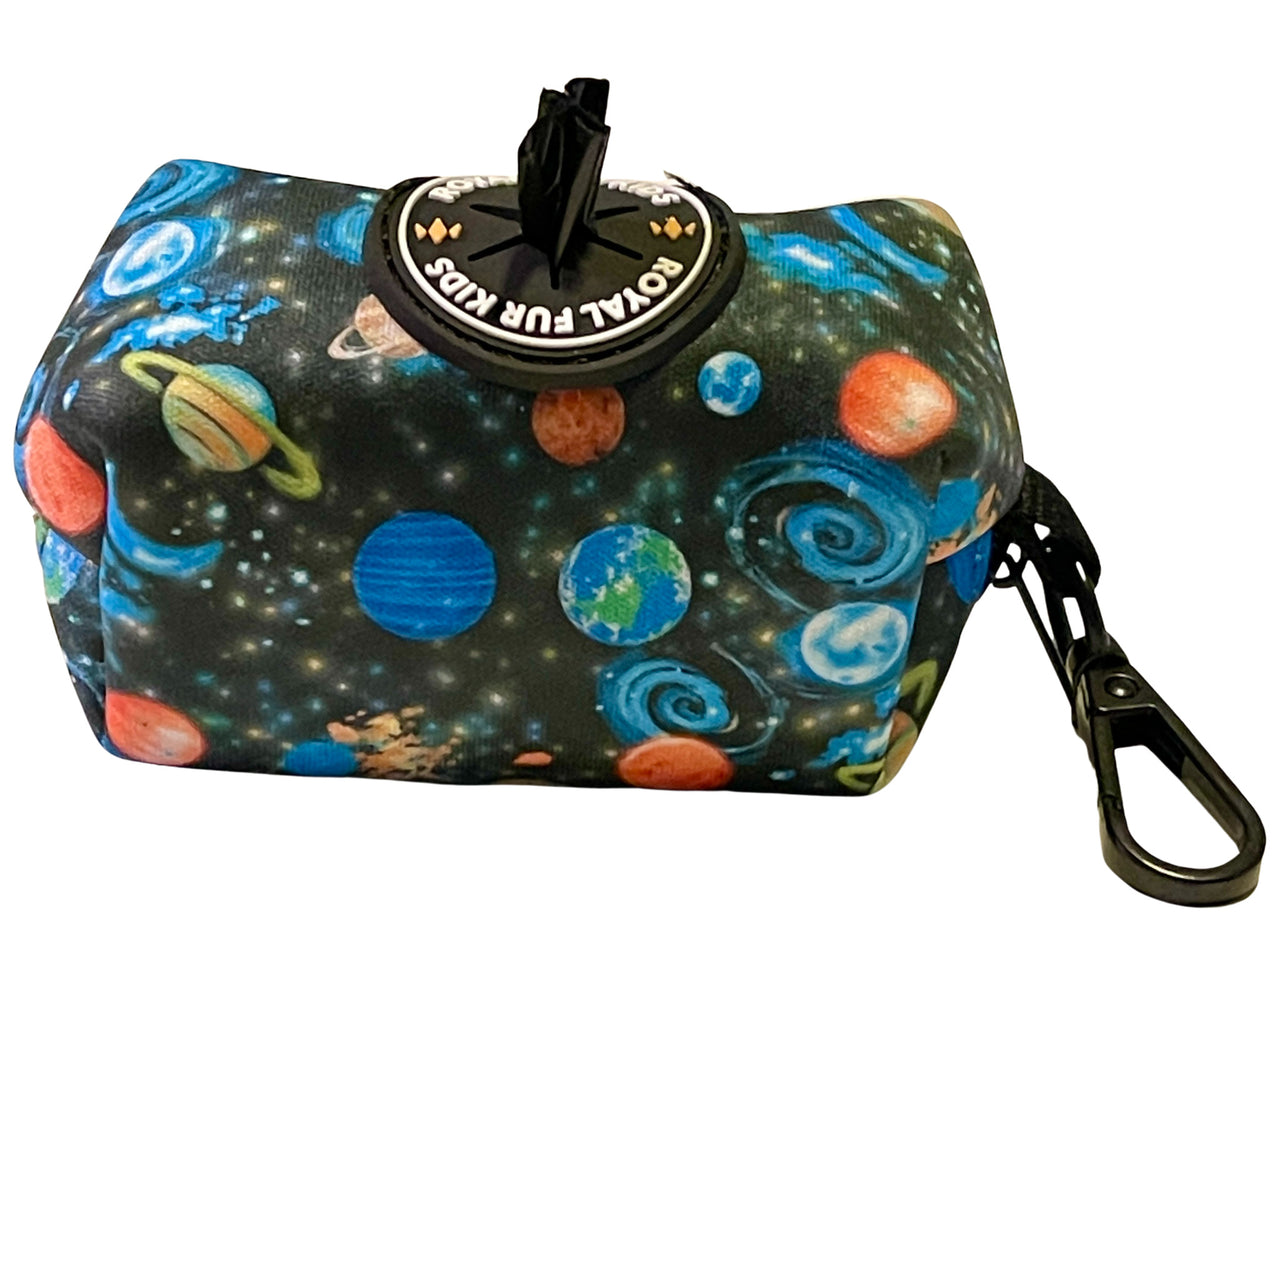 Intergalactic Space Odyssey Poop Bag Holder